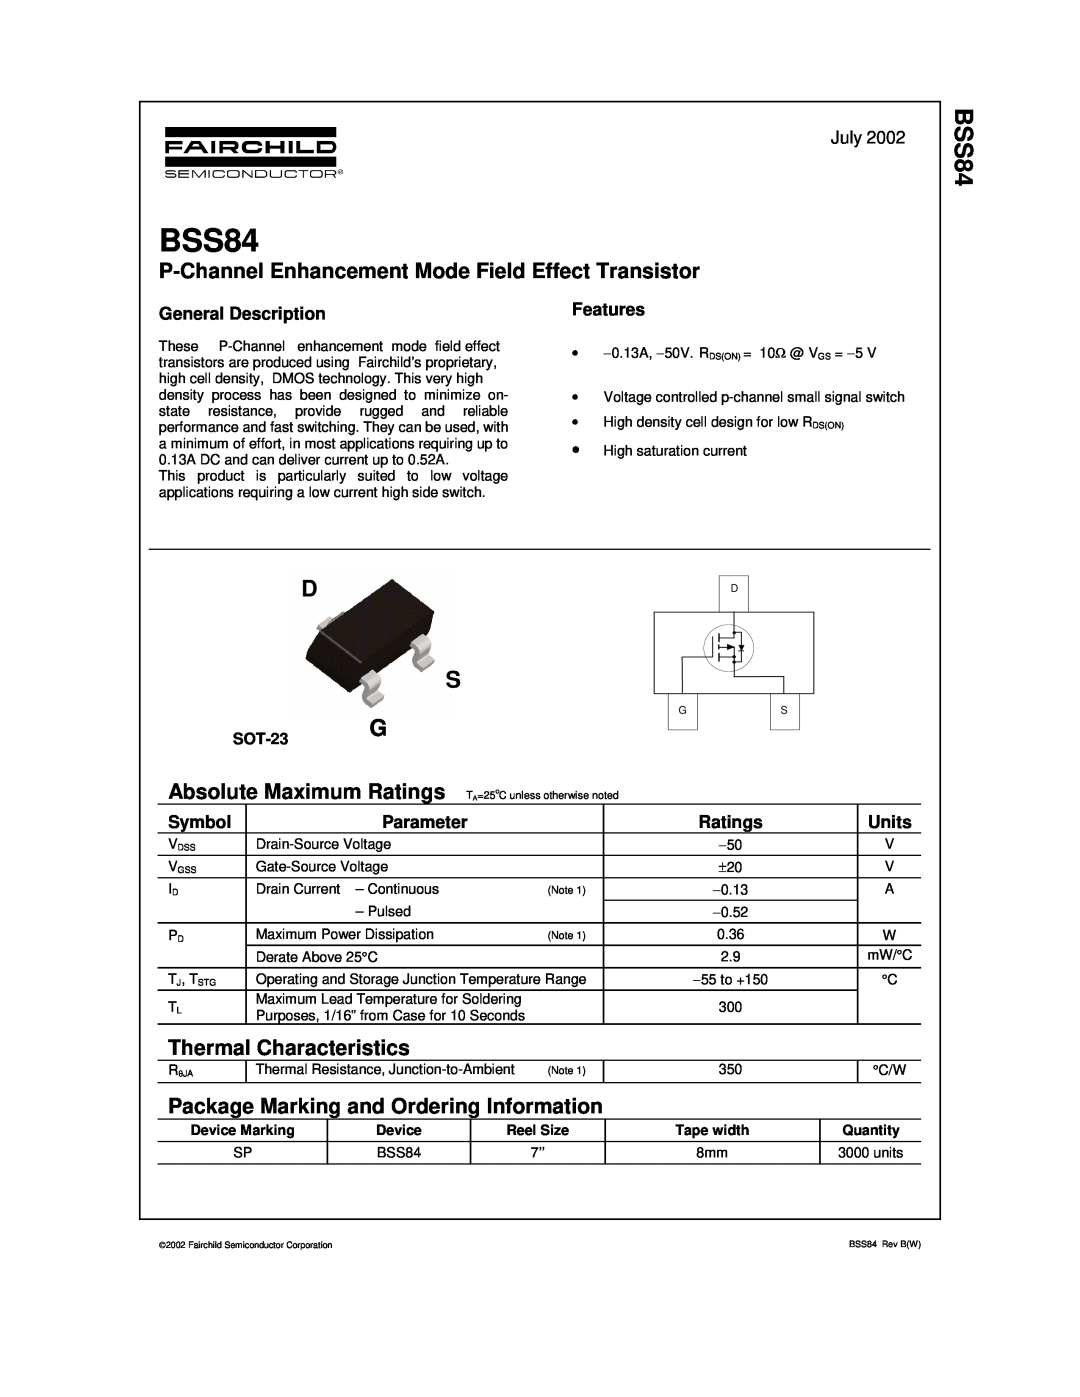 Fairchild BSS84 manual P-ChannelEnhancement Mode Field Effect Transistor, Thermal Characteristics, Device Marking, units 